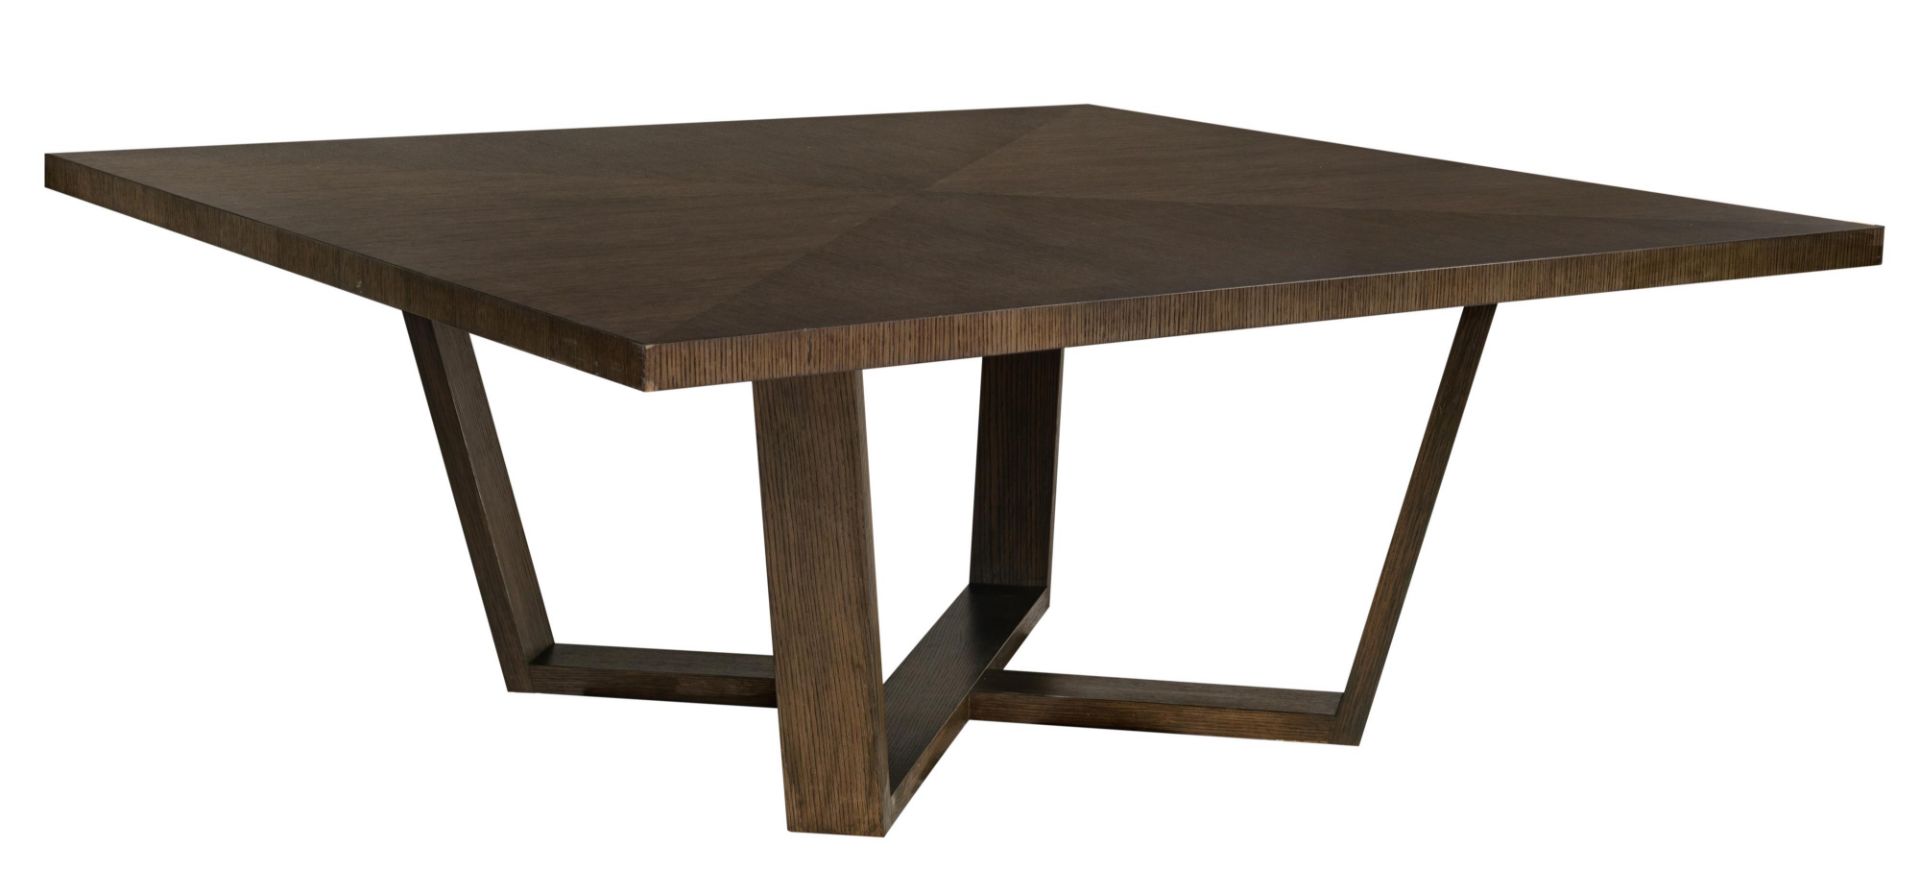 A square 'Xilos' dining table, by Antonio Citterio for B&B Italia, H 178 - W 73 cm